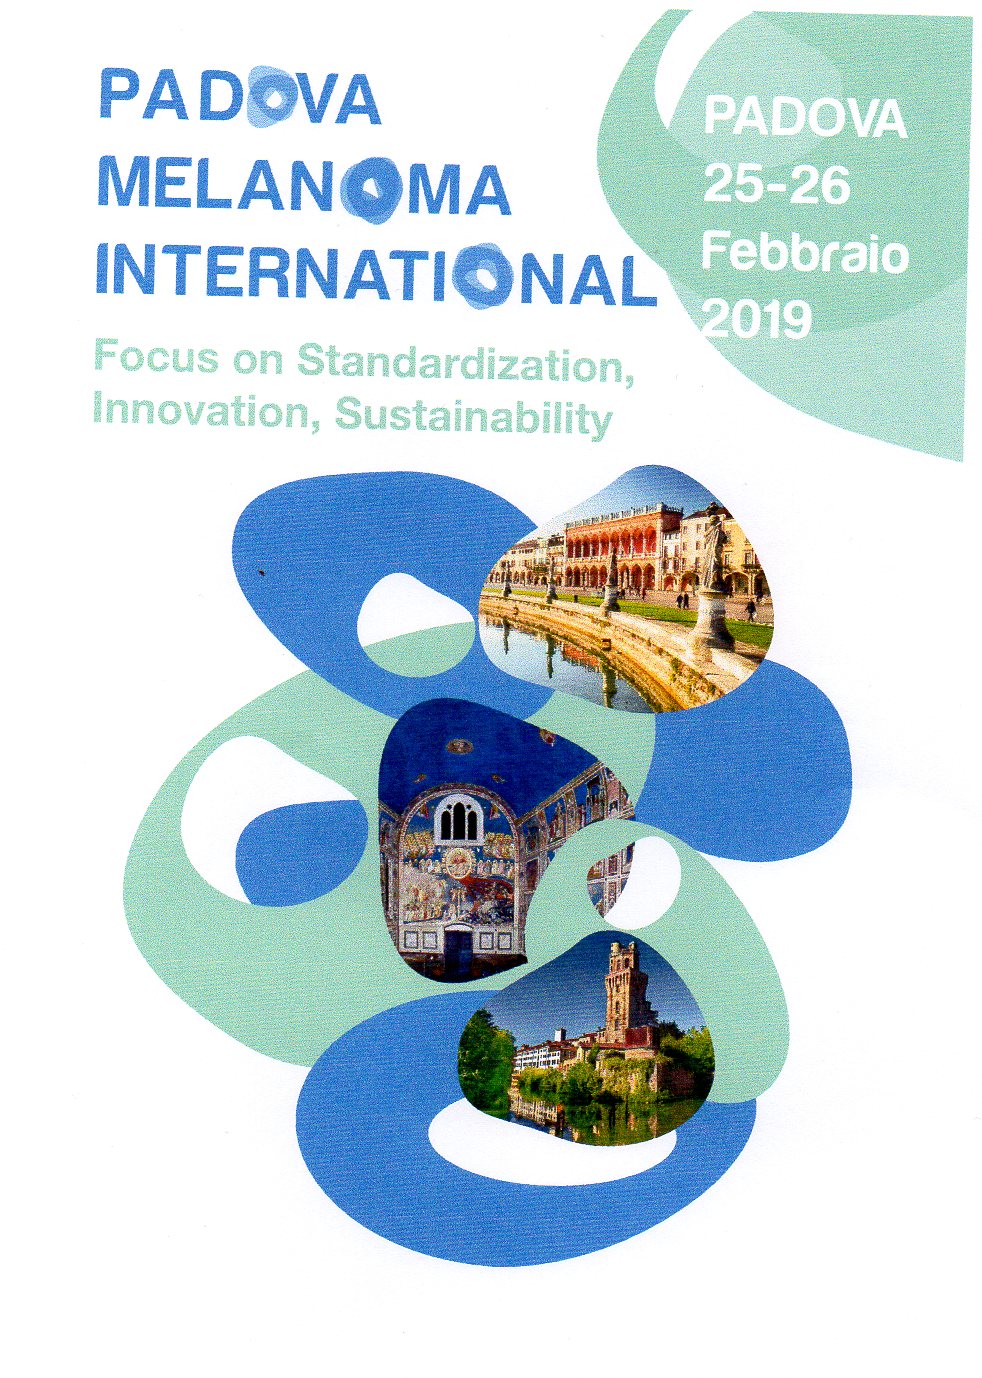 PADOVA MELANOMA INTERNATIONAL Focus on Standardization, Innovation, Sustainability.